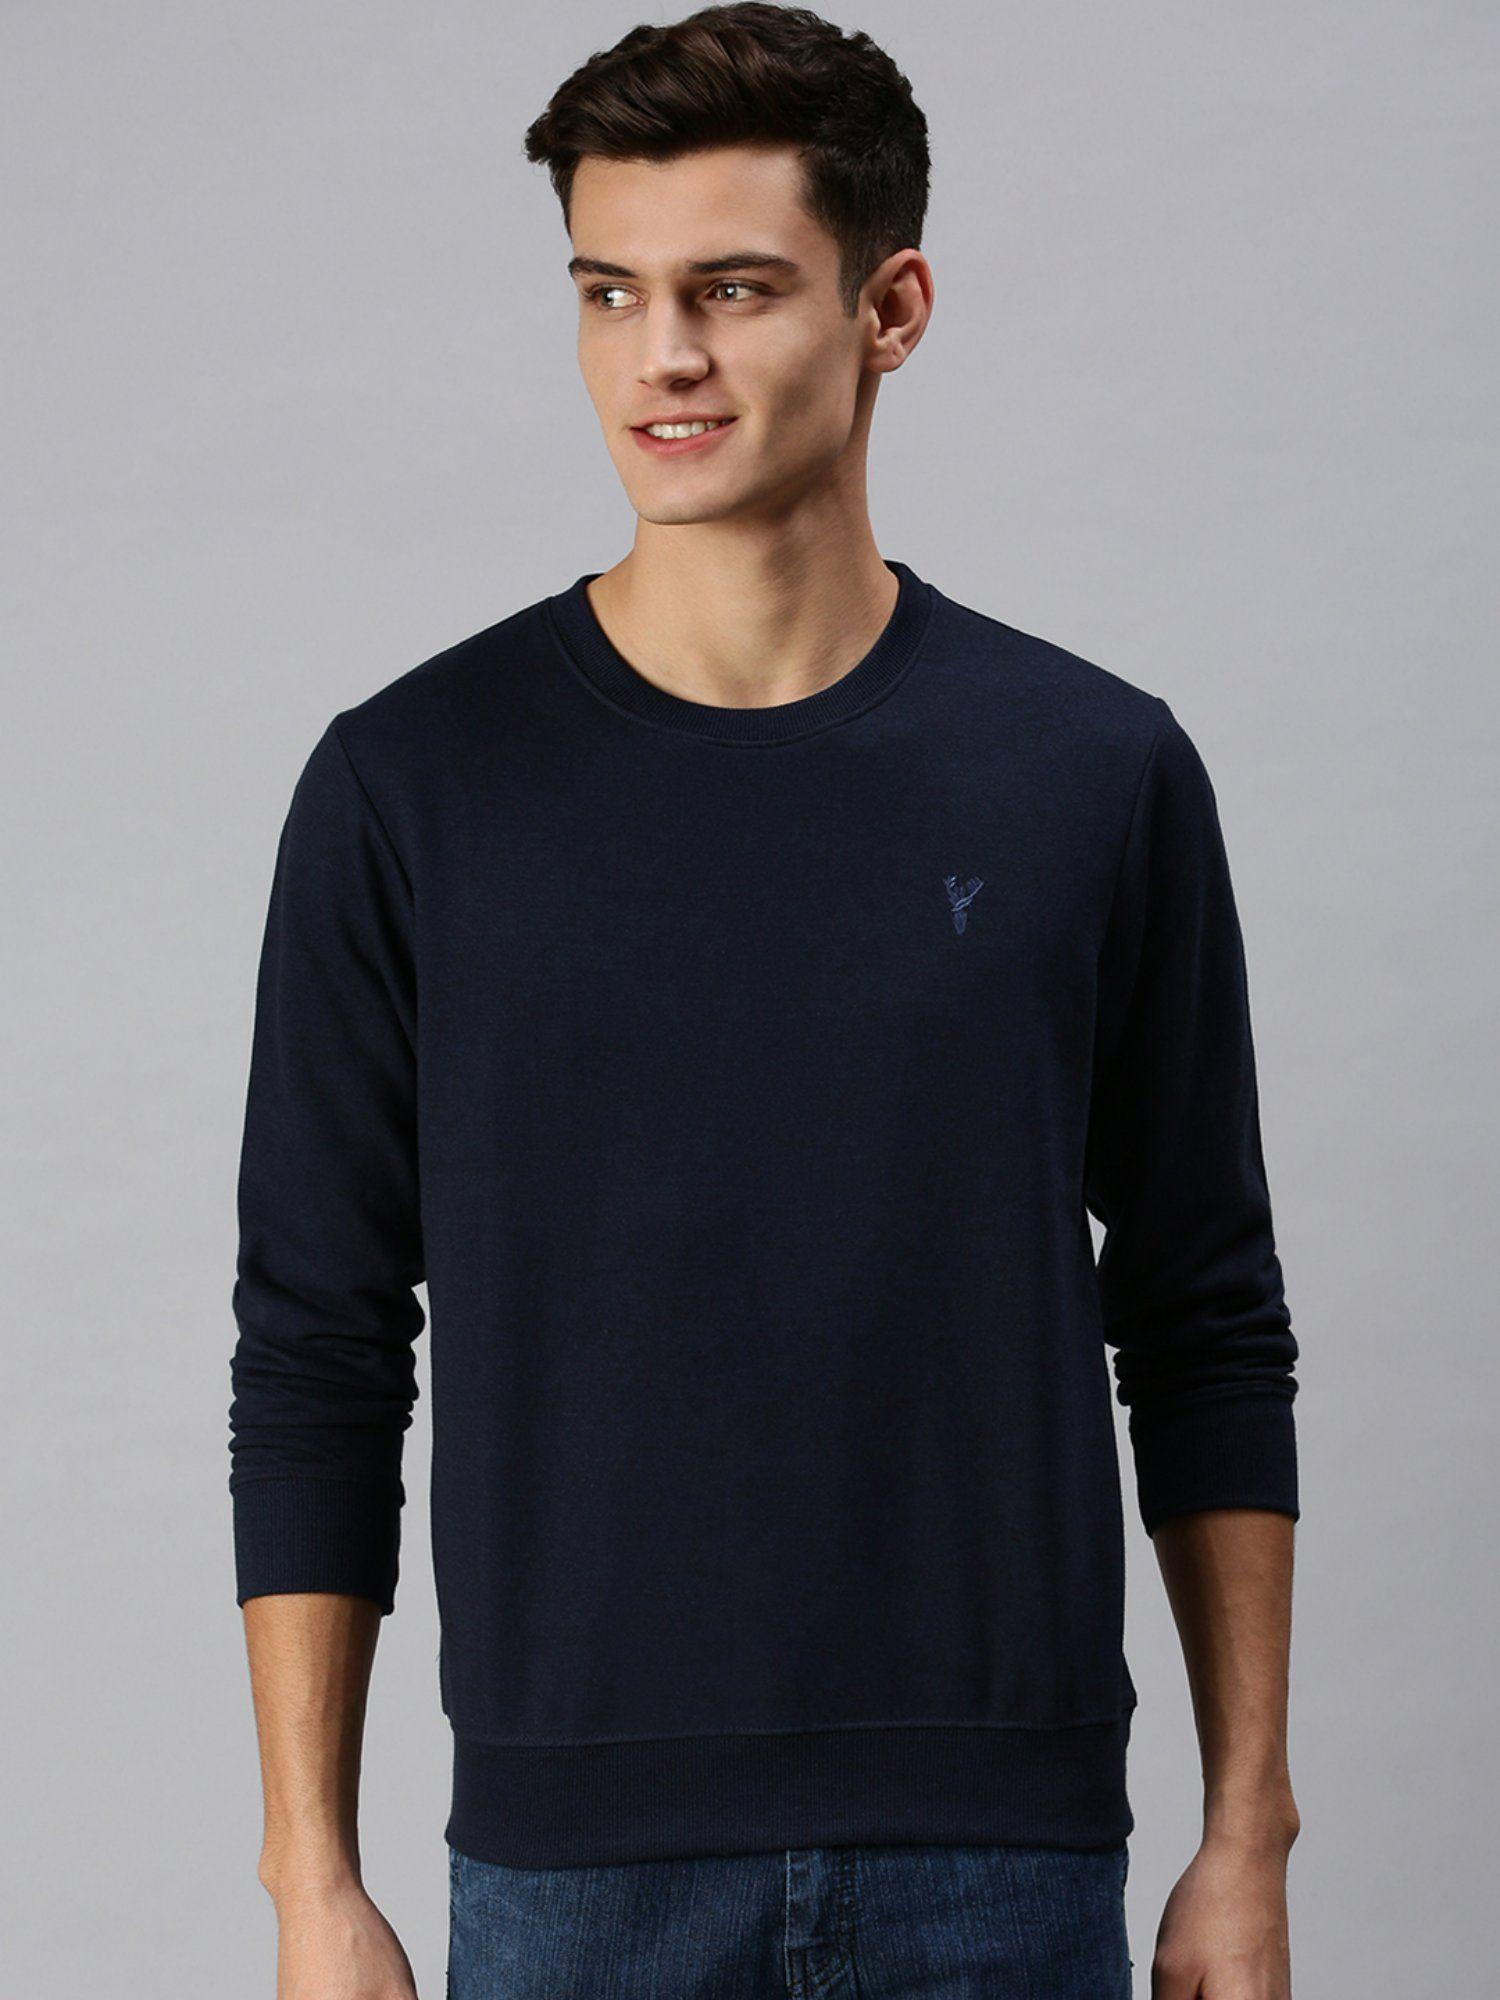 Men Casual Cotton Pullover Navy Blue Sweatshirt